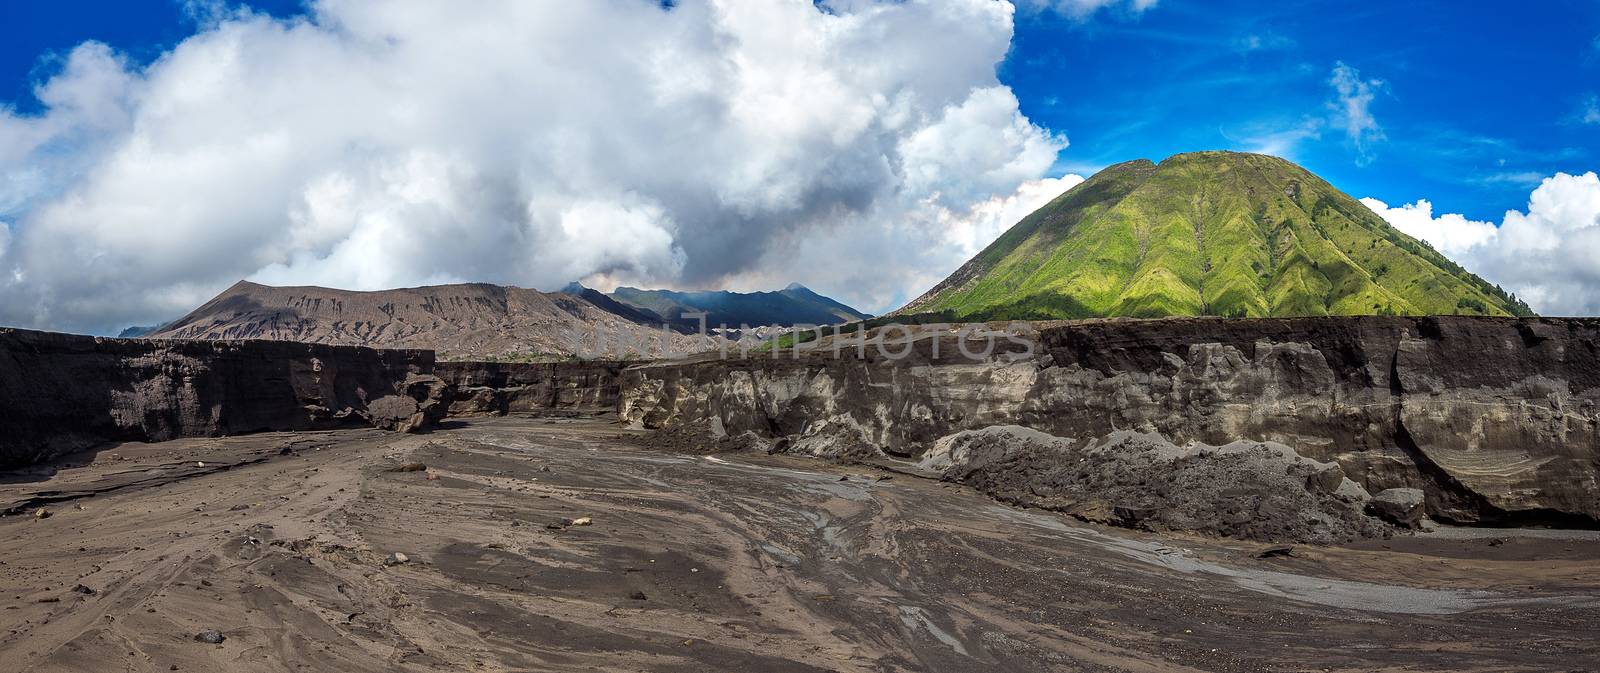 Mount Bromo volcano (Gunung Bromo)in Bromo Tengger Semeru National Park, East Java, Indonesia. by gutarphotoghaphy